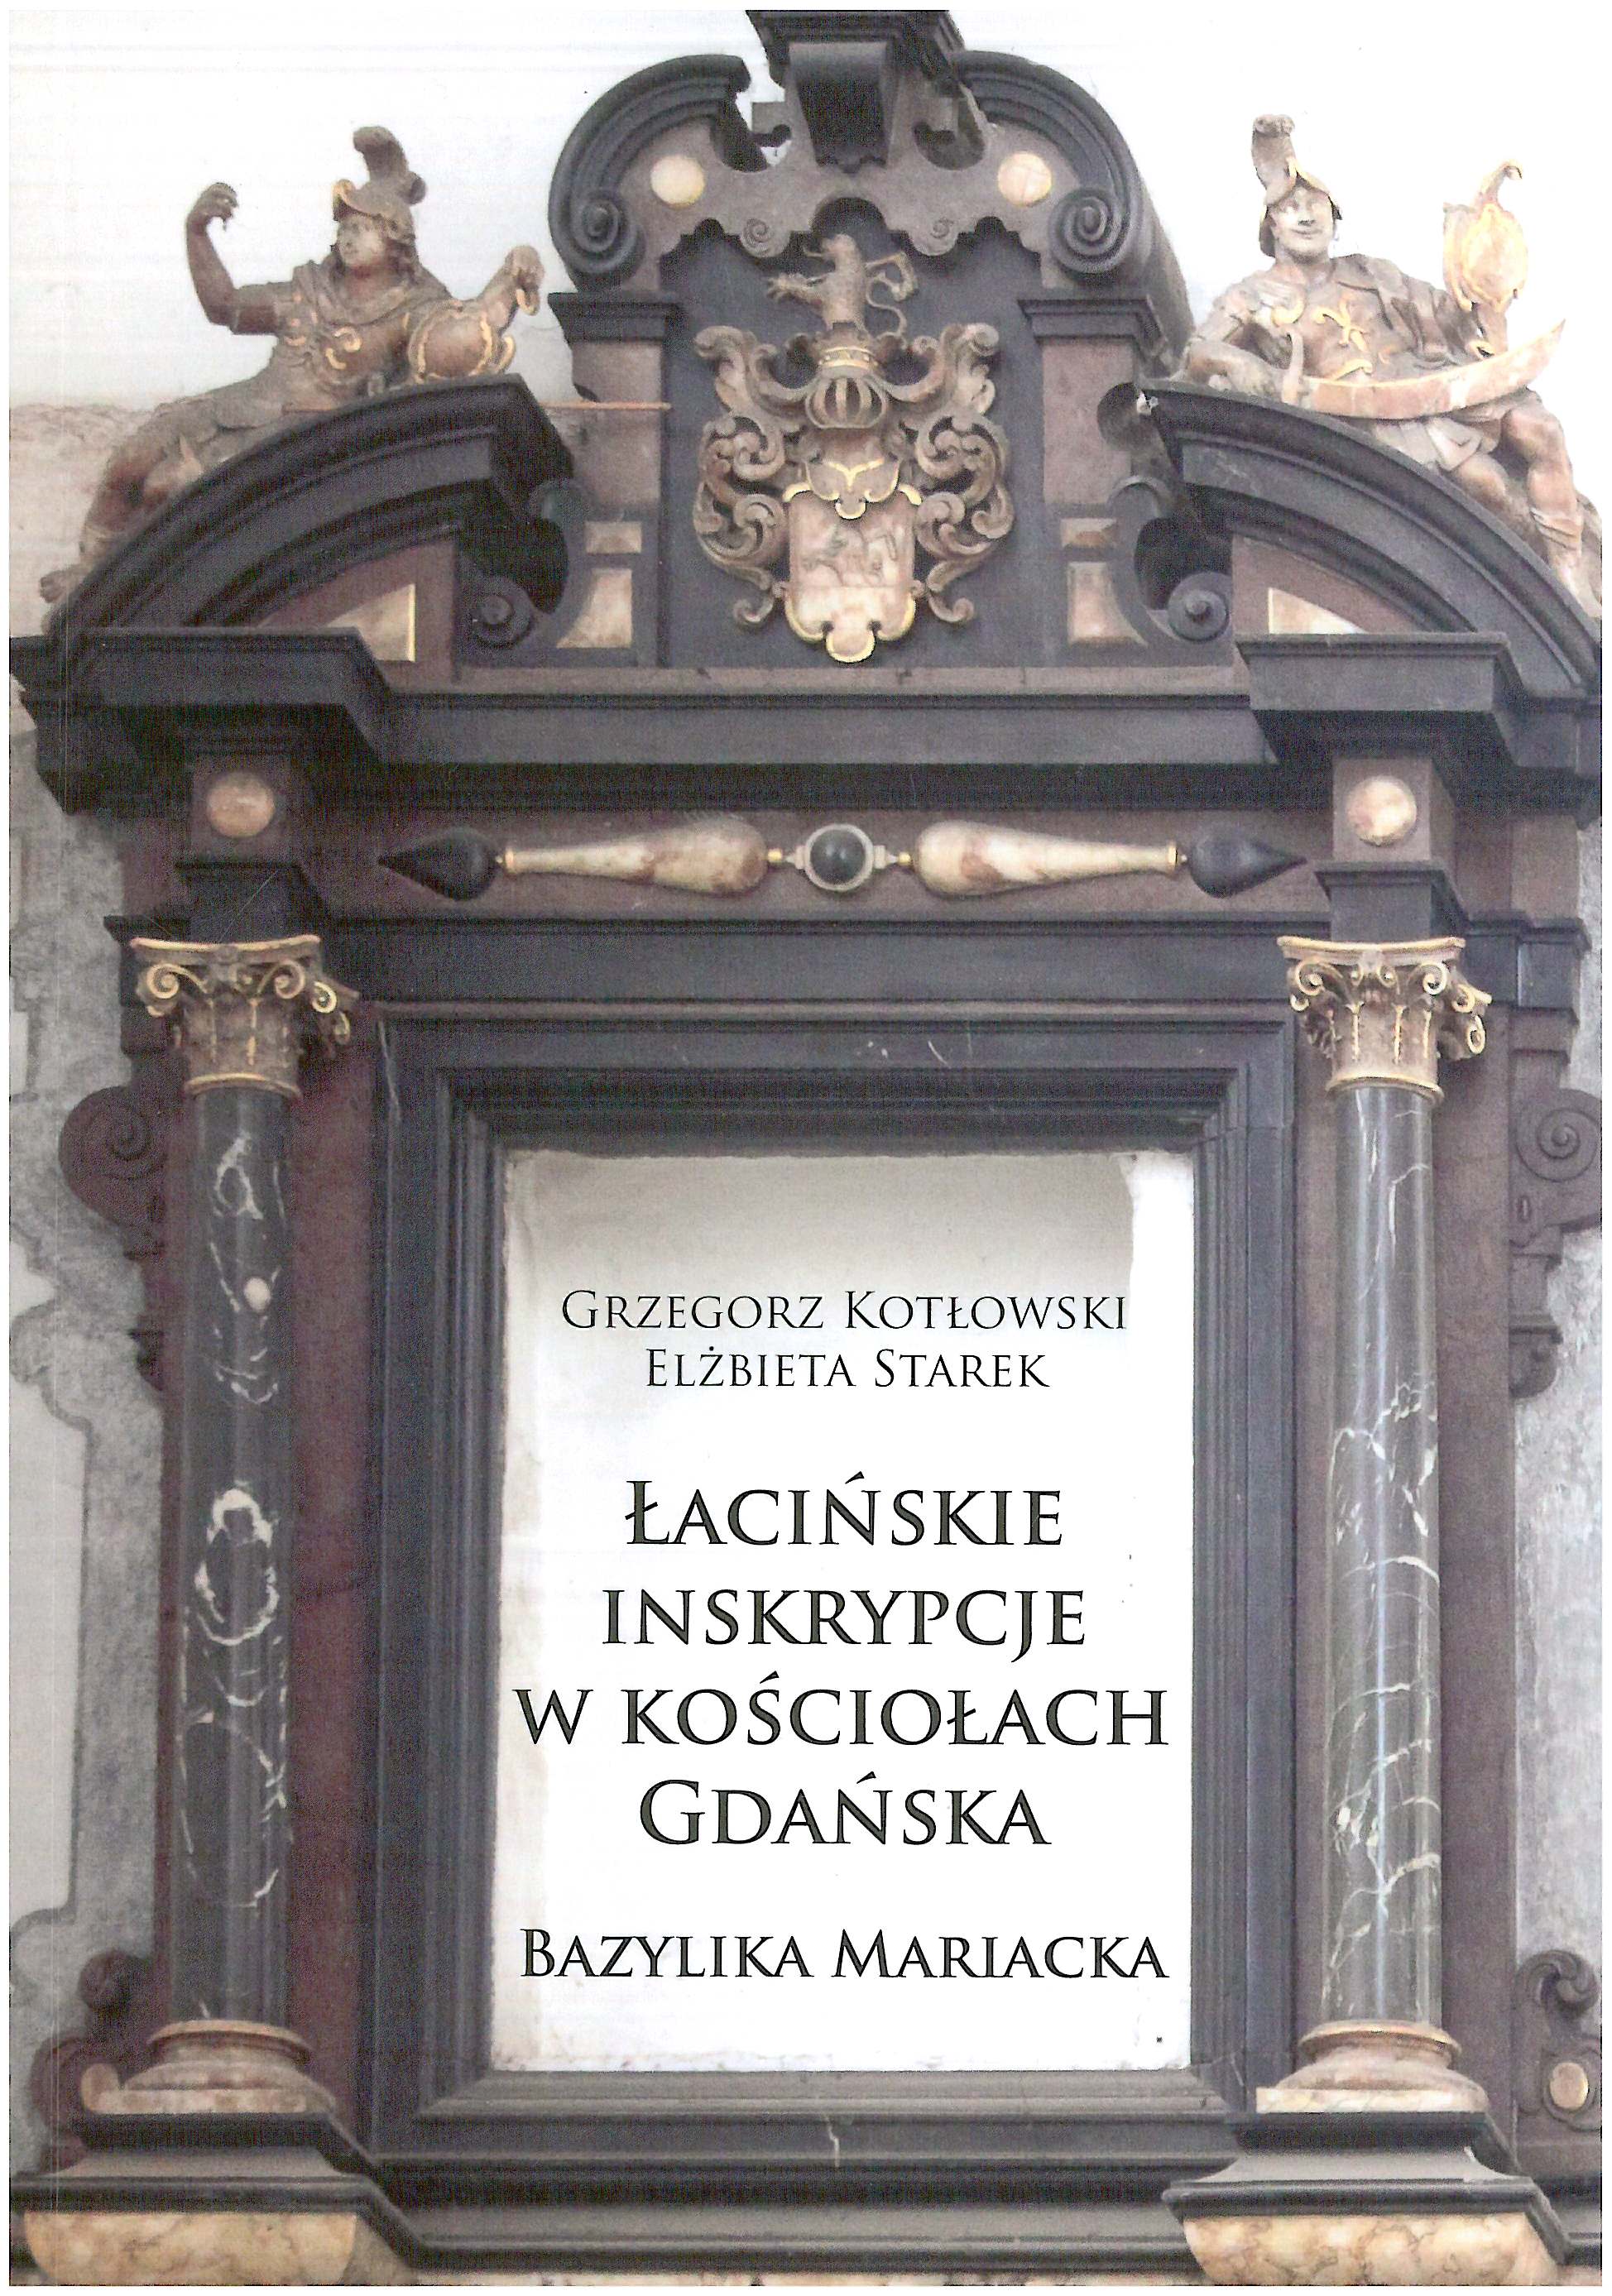 Bazylika Mariacka - inskrypcje